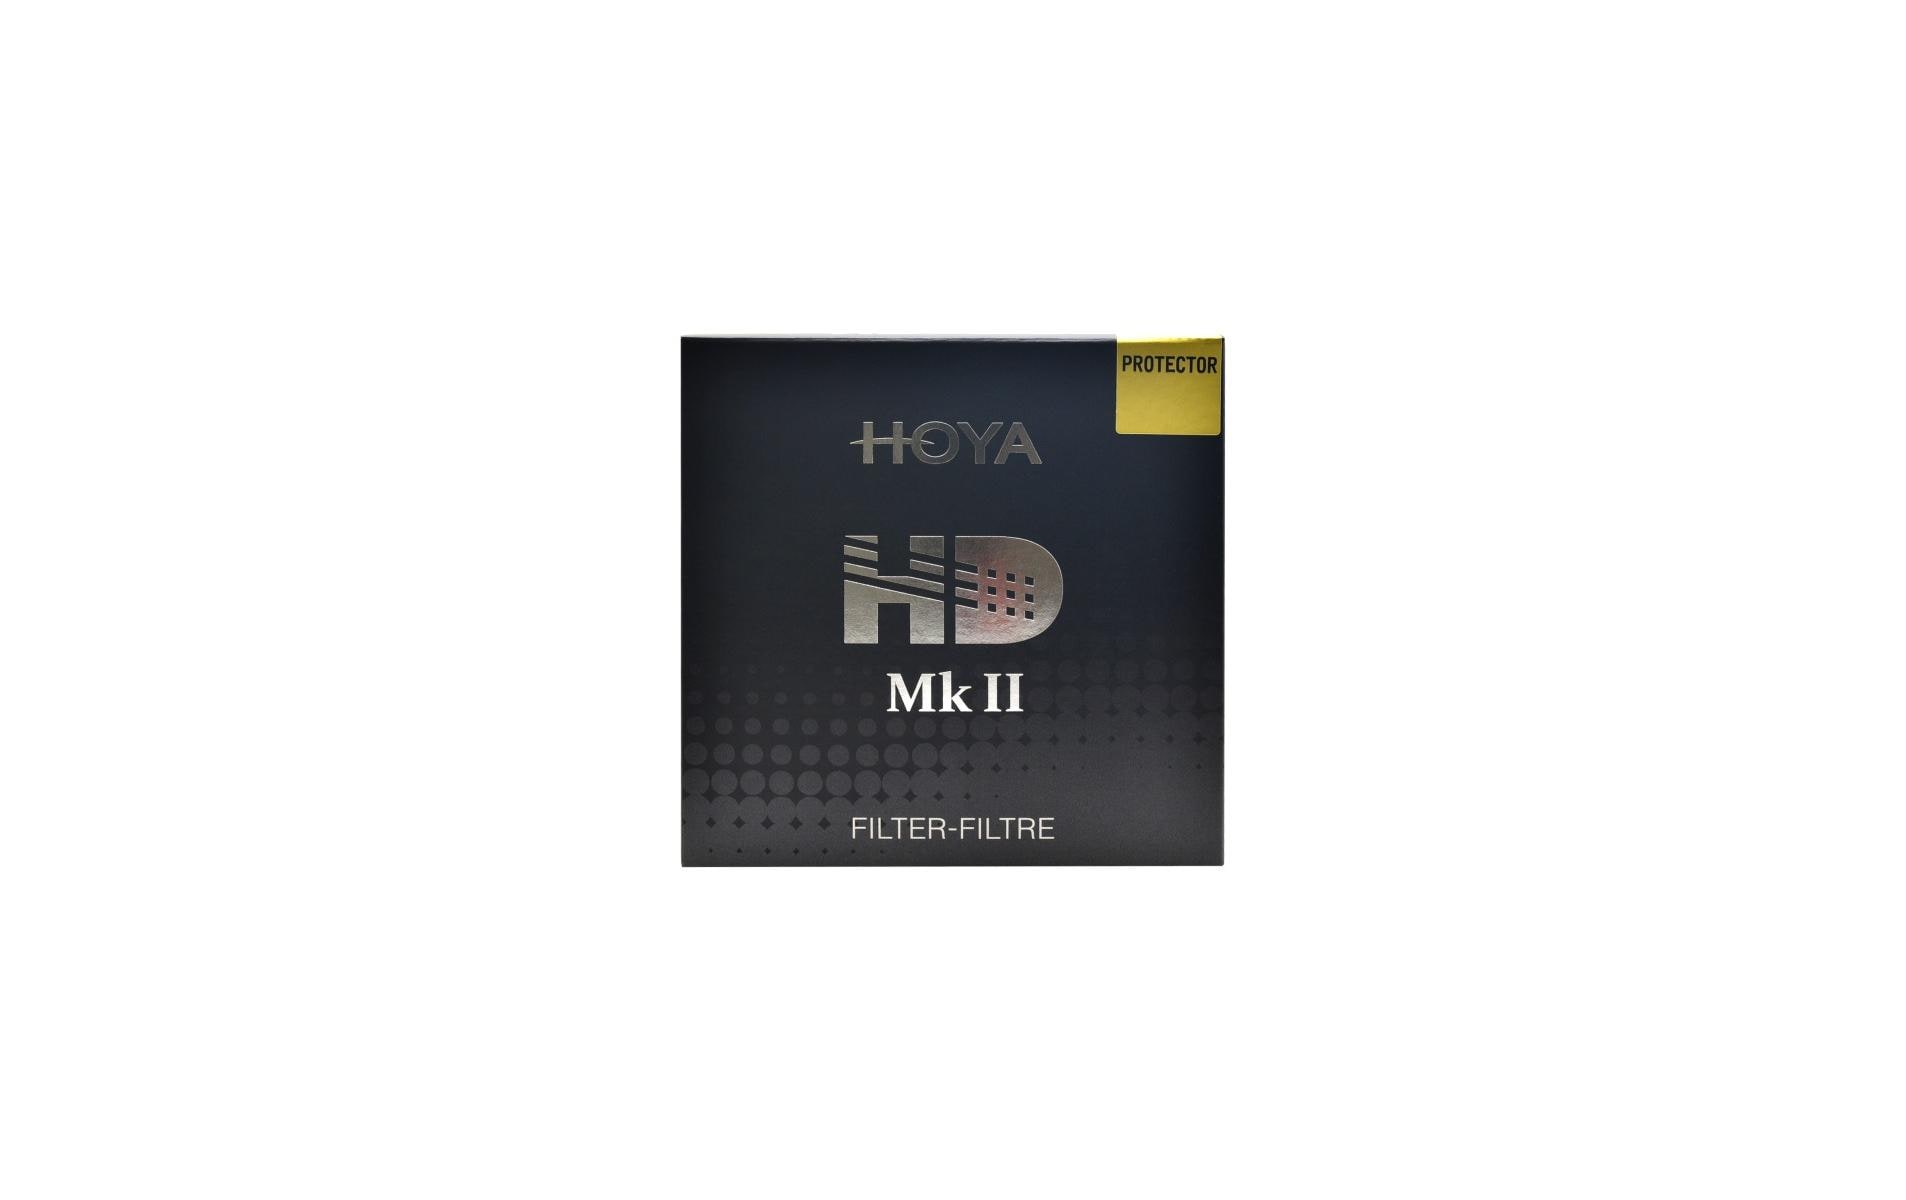 Hoya Objektivfilter HD Mk II Protector – 55 mm